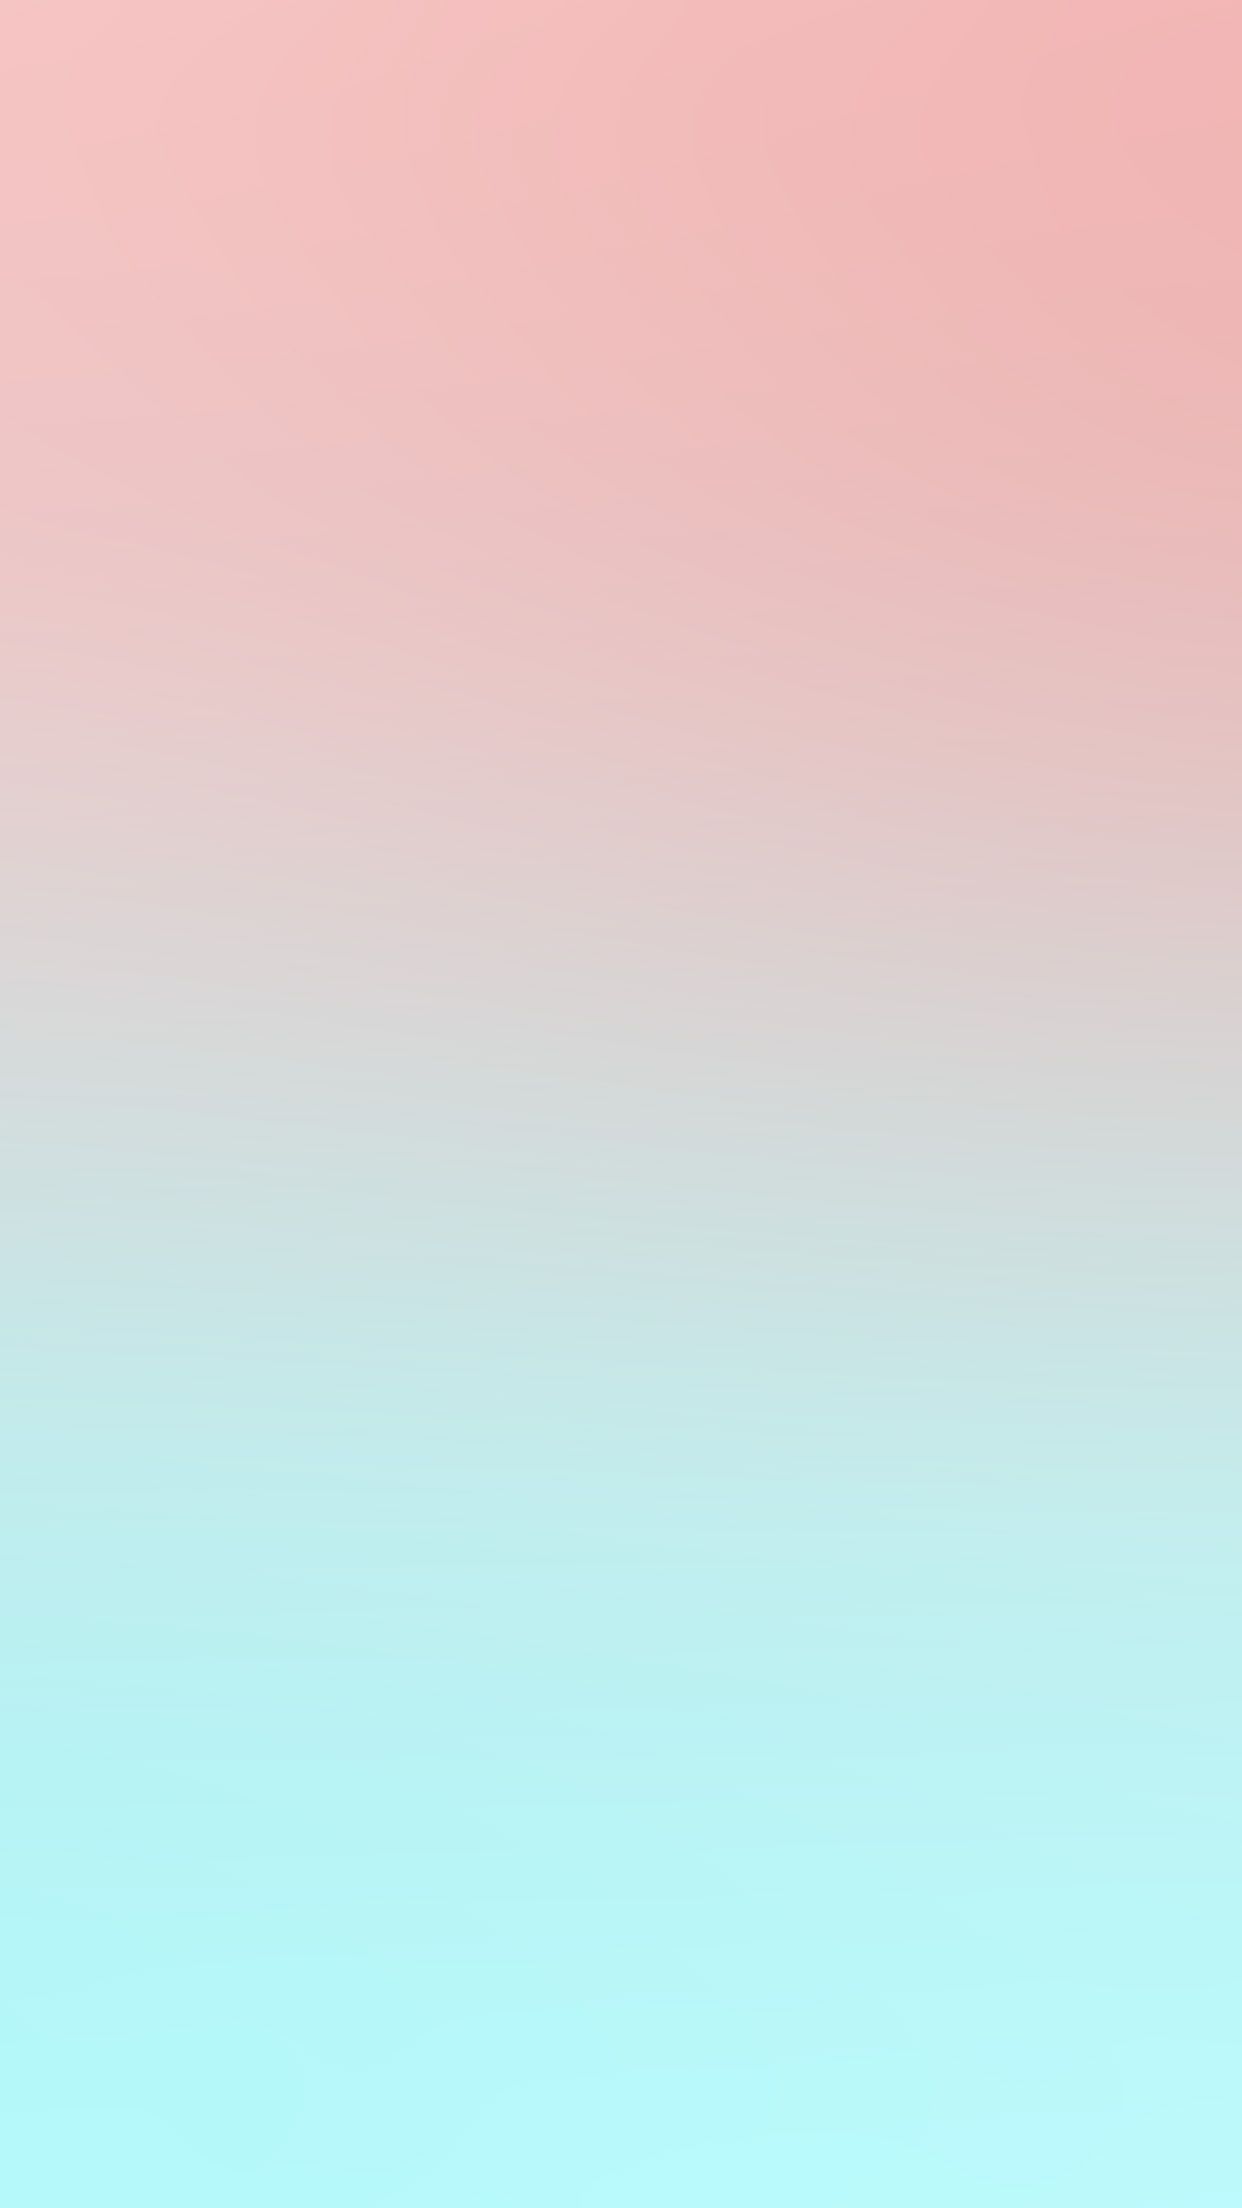 iPhone wallpaper. red blue soft pastel blur gradation